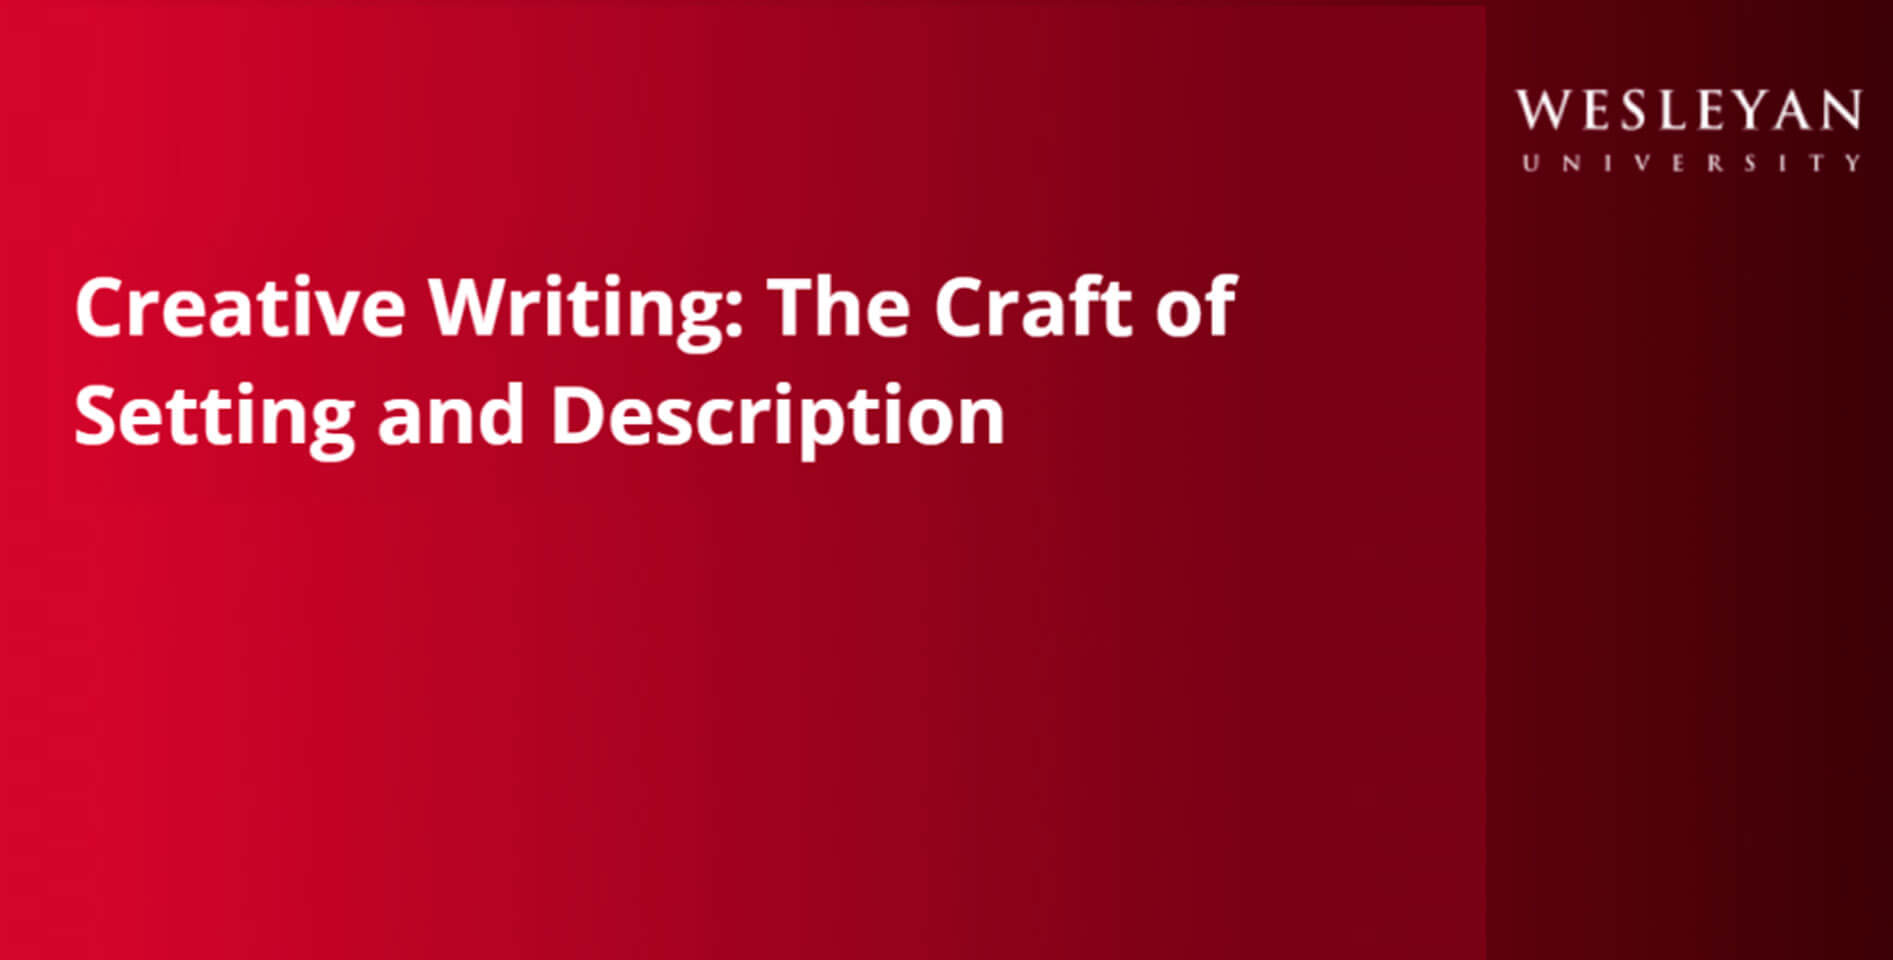 Уэслианский university — Creative Writing: The Craft of Setting and Description